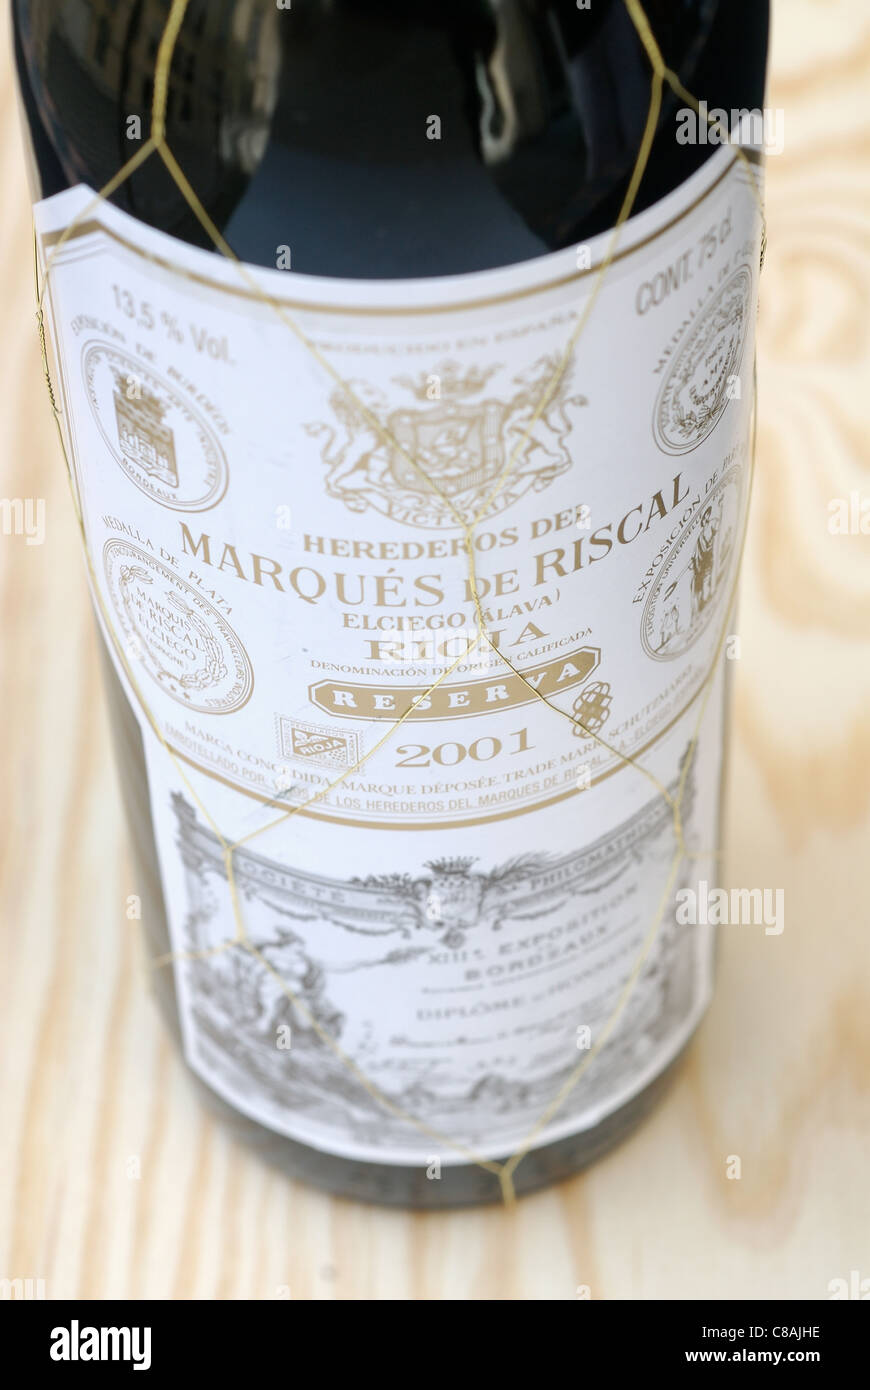 Bottle of Spanish red wine Marqués de Riscal Stock Photo